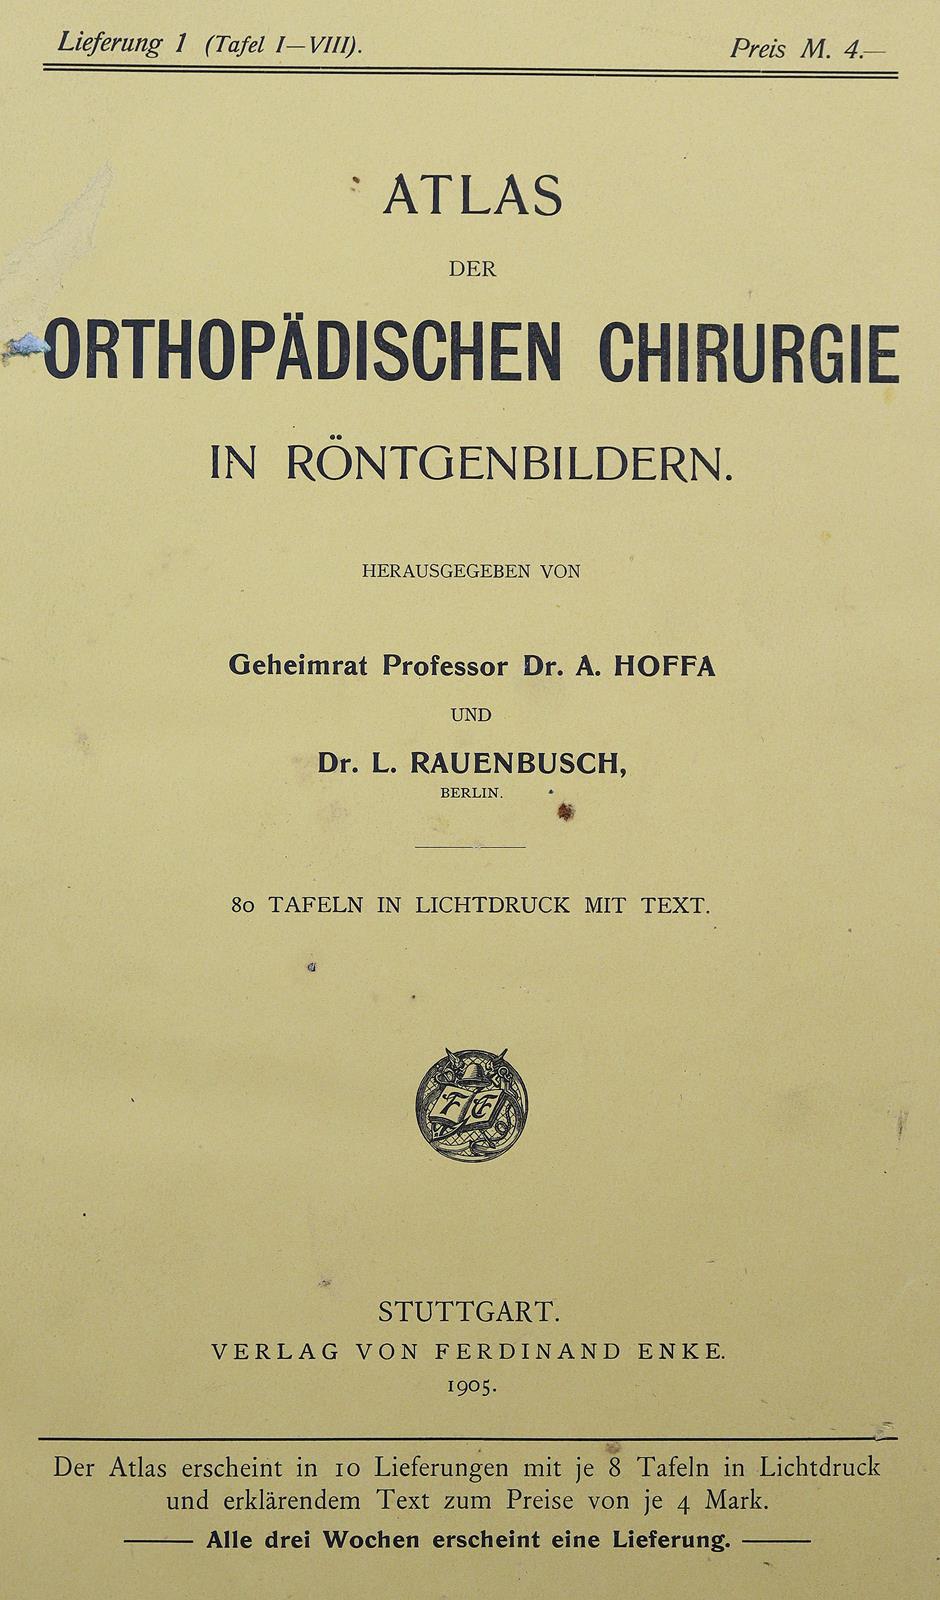 Hoffa,A. u. L.Rauenbusch. | Bild Nr.3